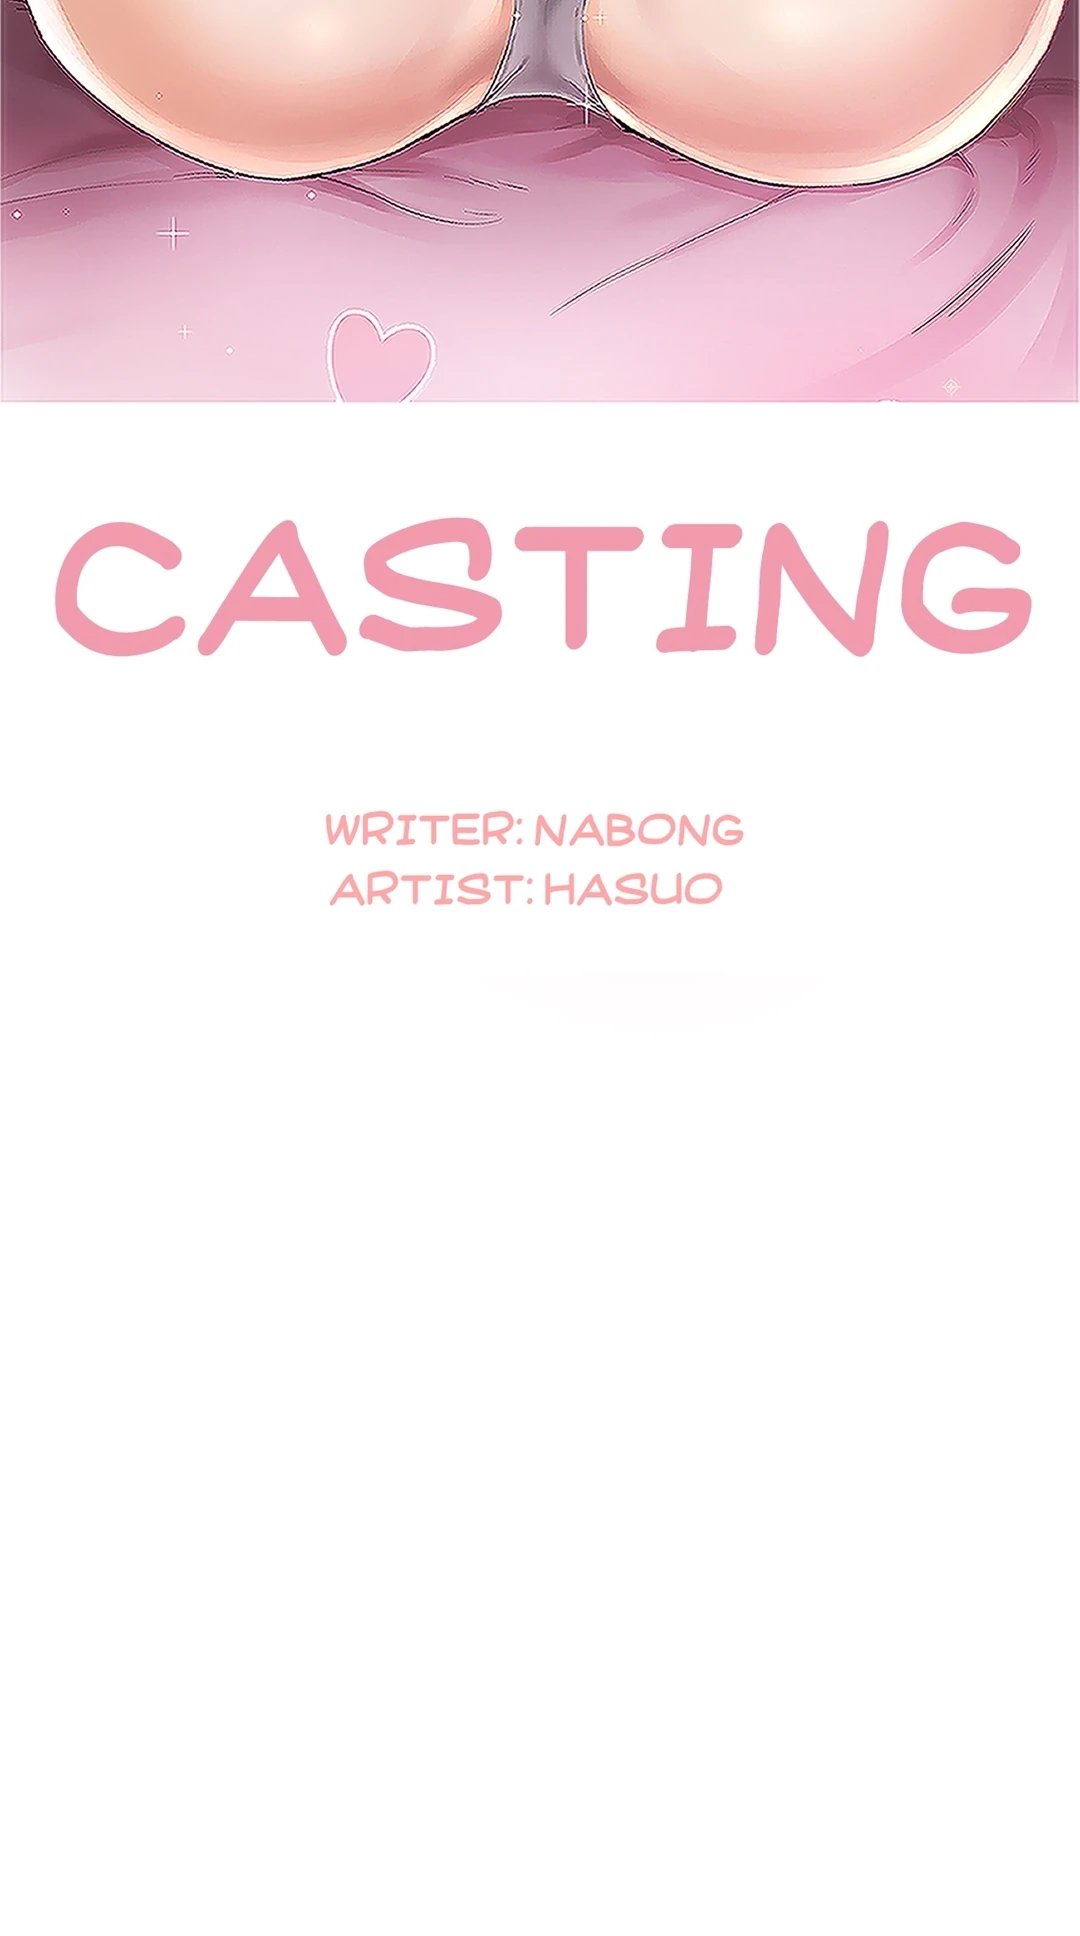 Casting image